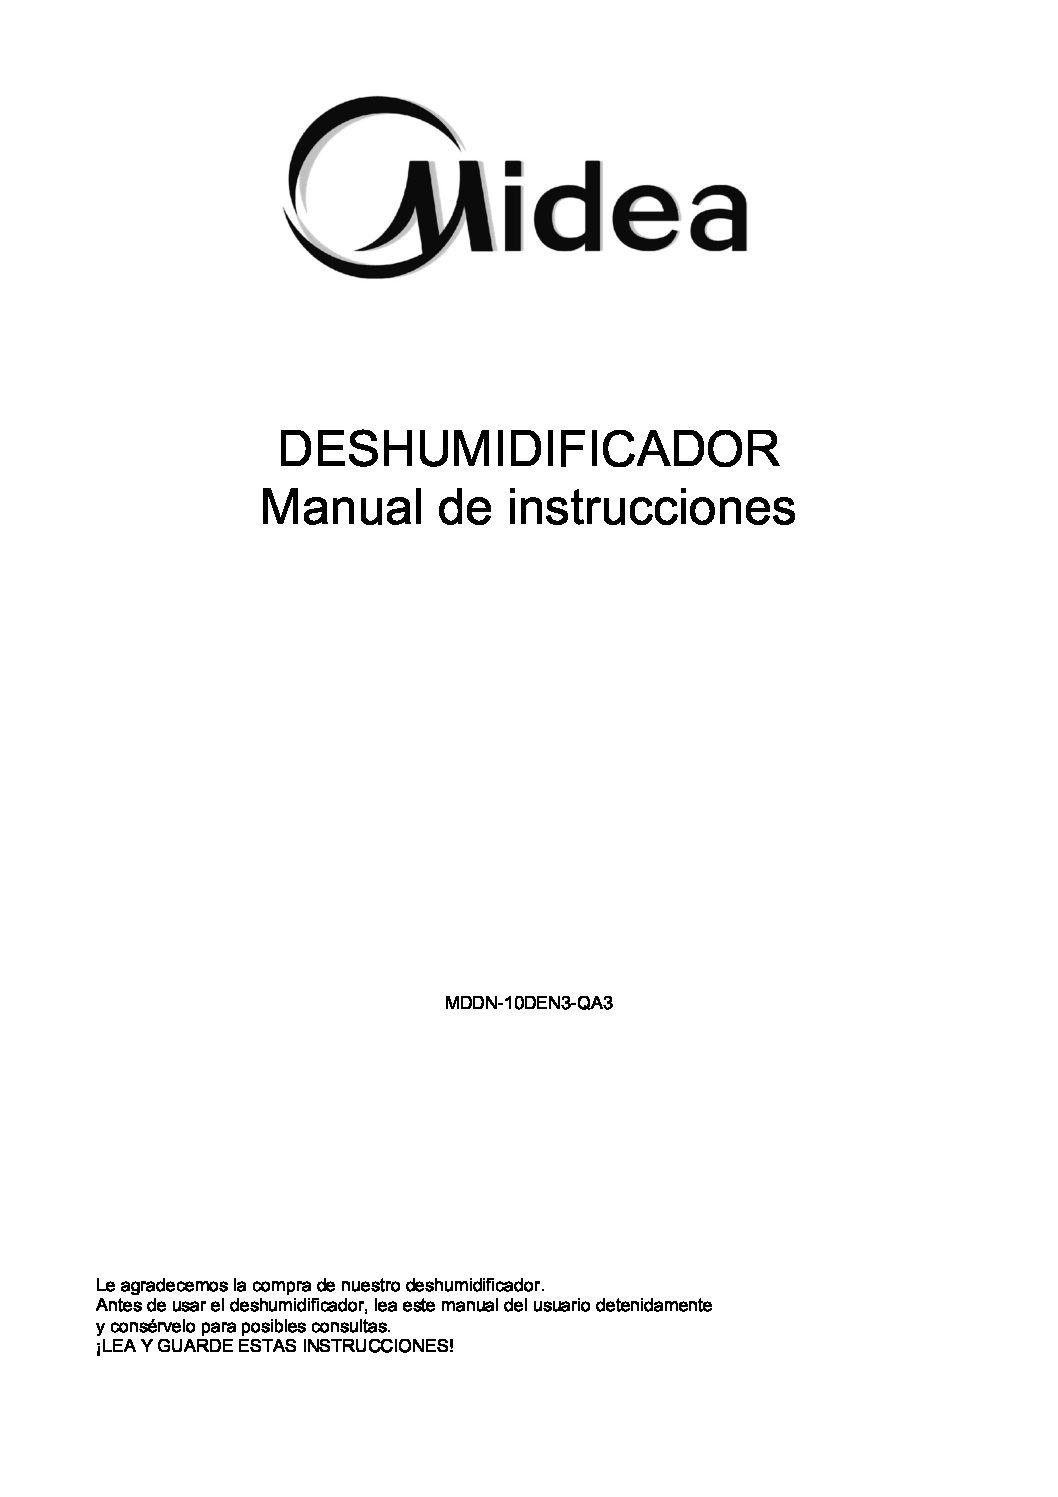 Deshumidificador Midea MDK Climaproyectos S.A. de C.V.